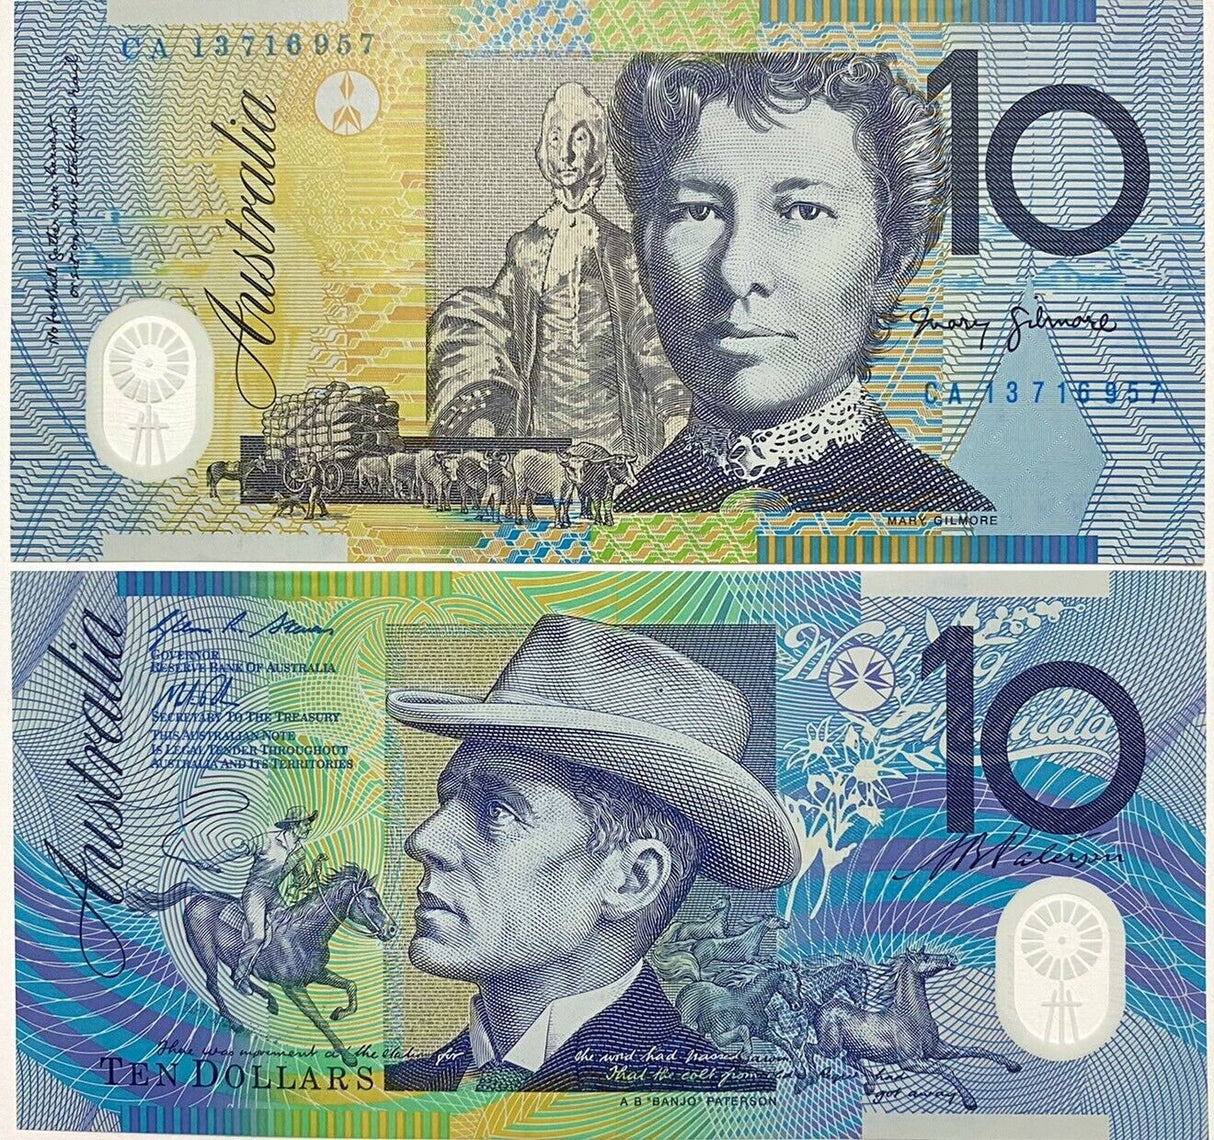 Australia 10 Dollars 2013 P 58 g POLYMER UNC